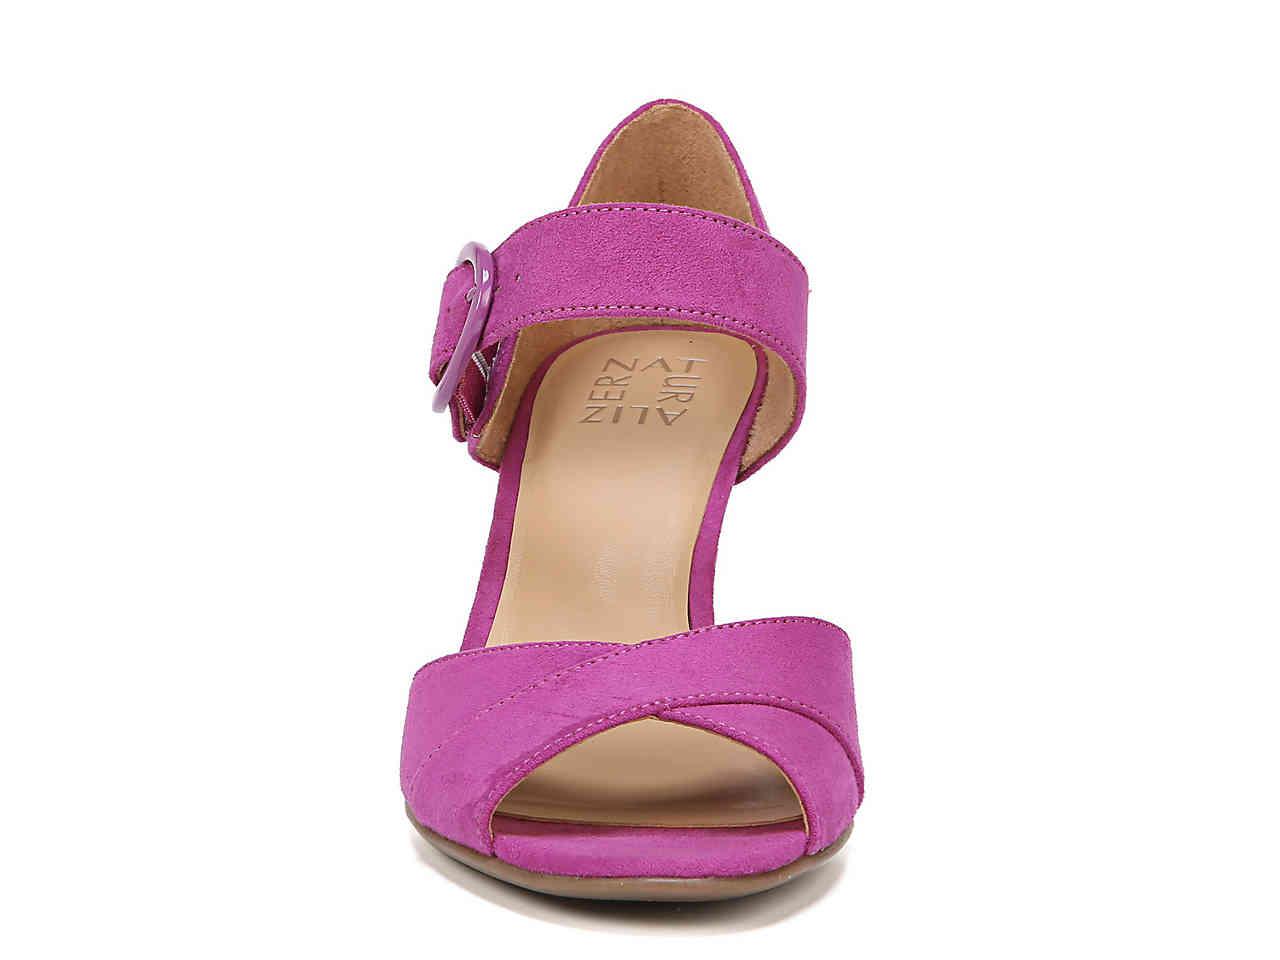 Naturalizer Bardot Sandal in Purple - Lyst